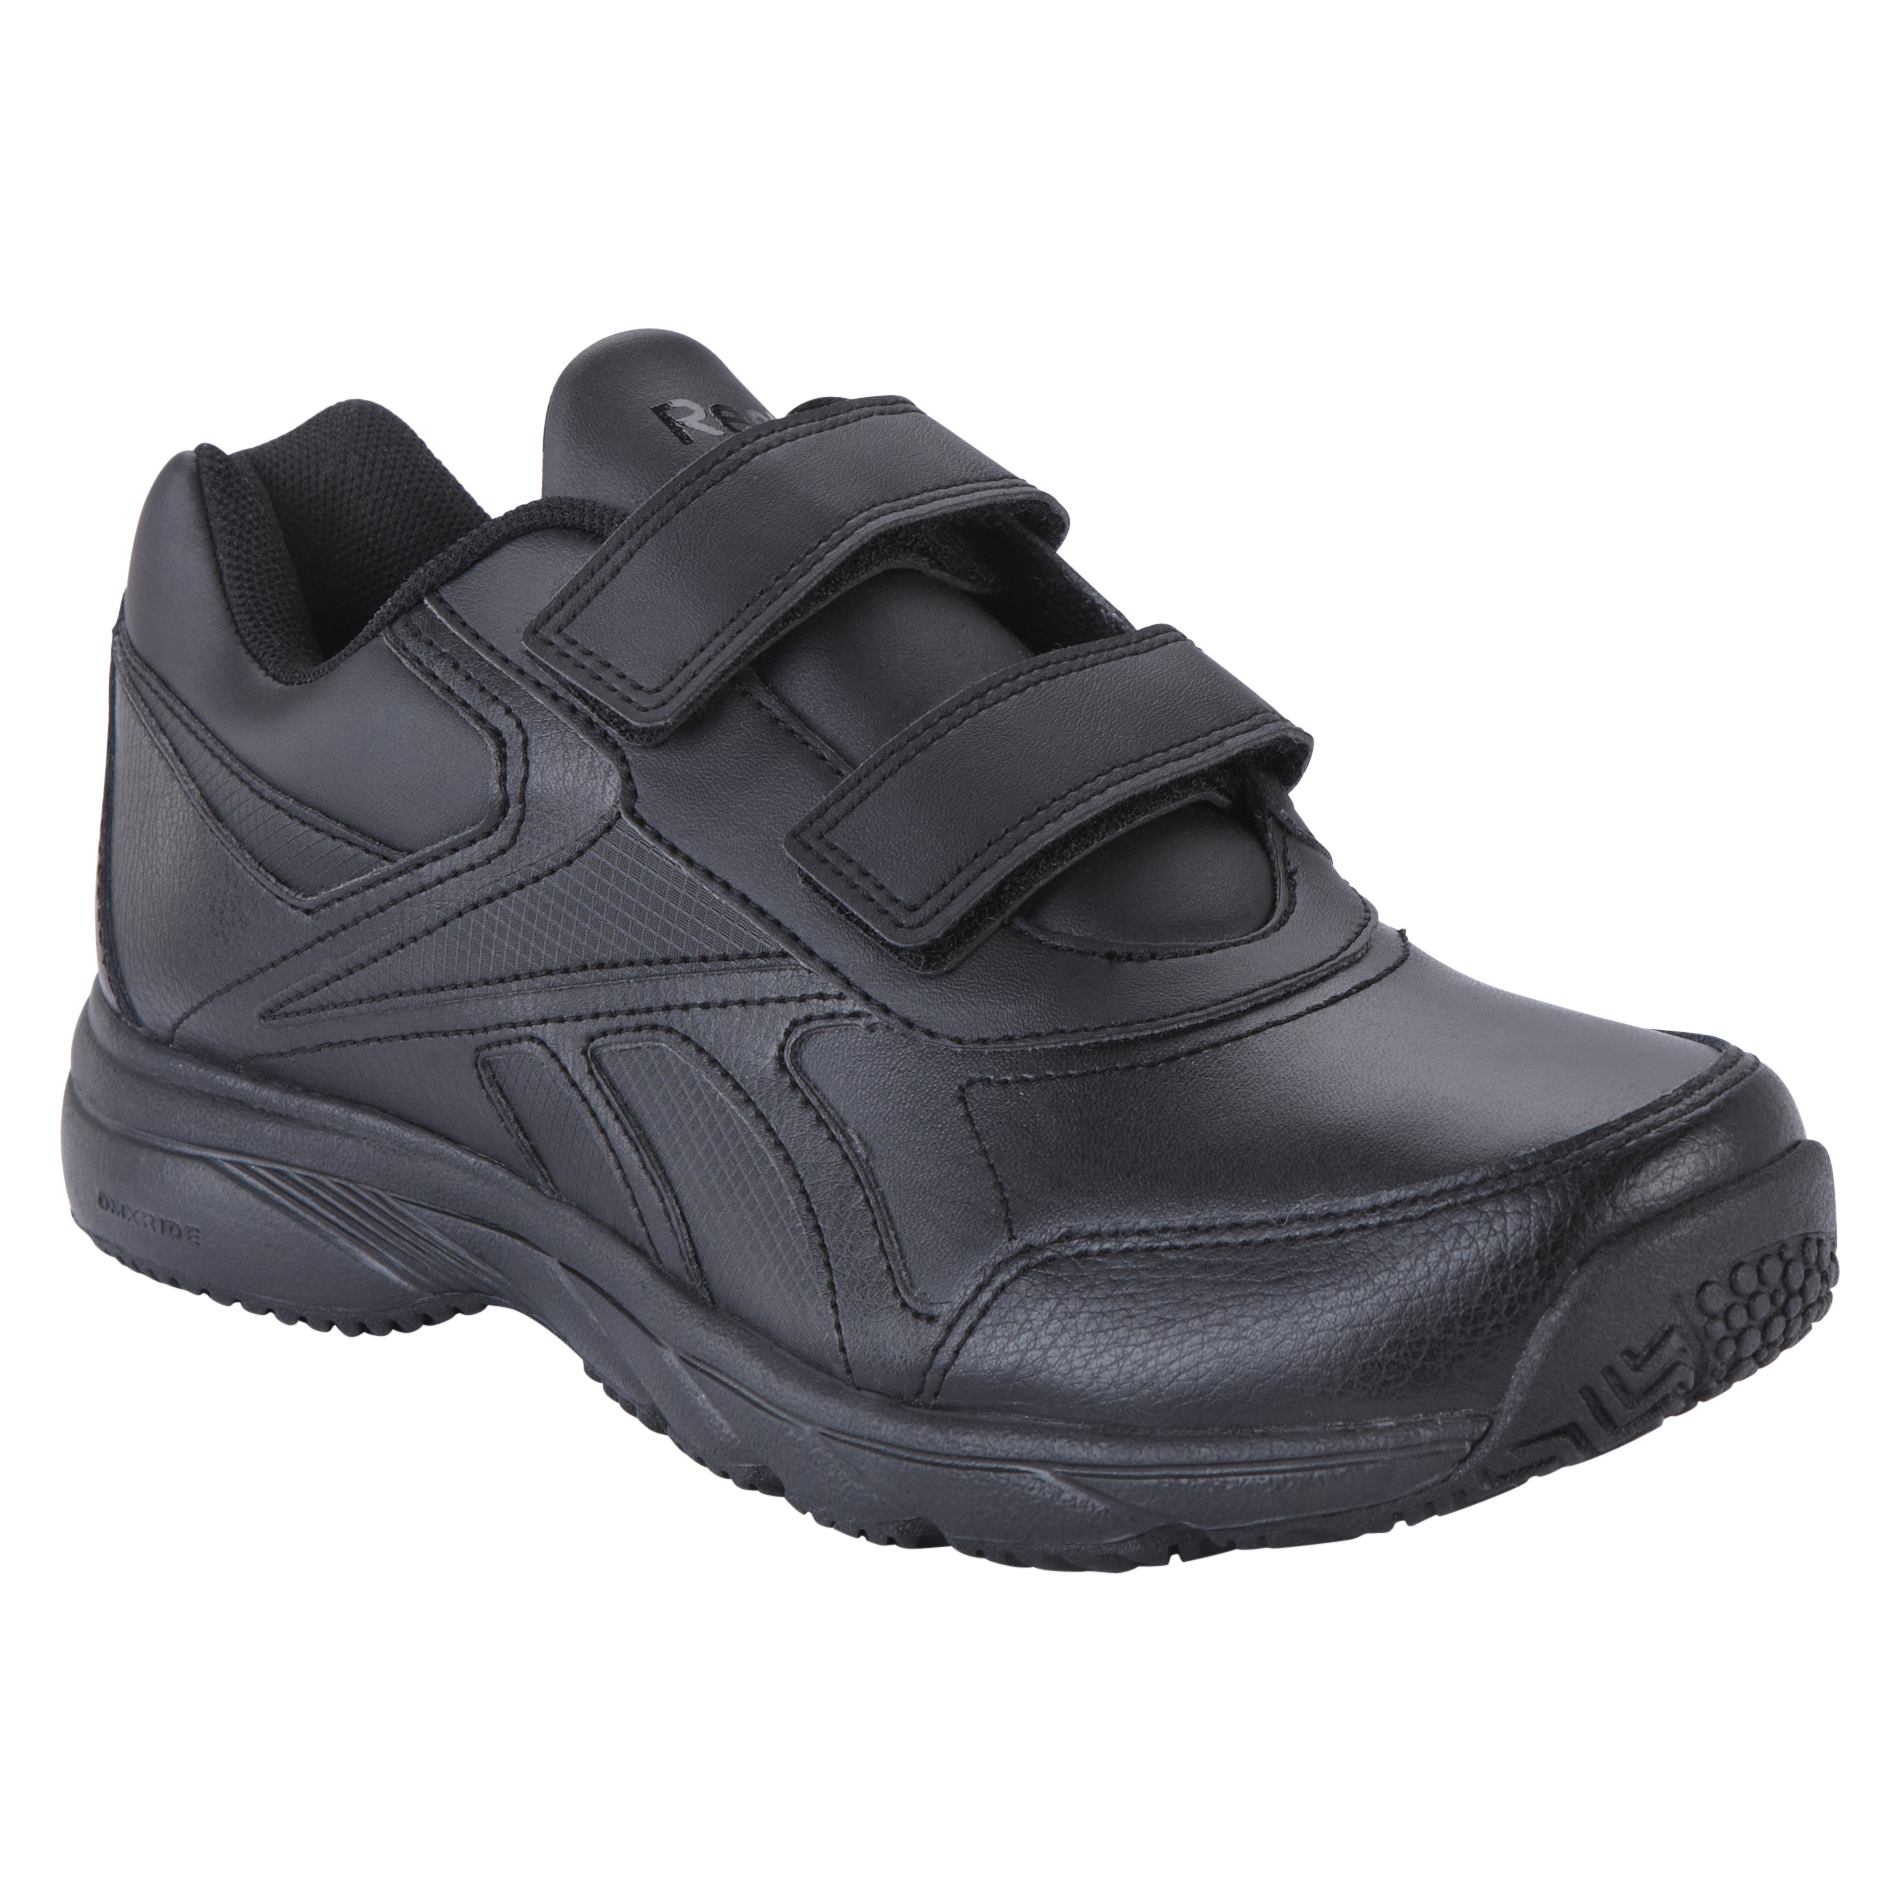 Reebok Women's Work N' Cush Slip Resistant Shoe - Black | Shop Your Way ...